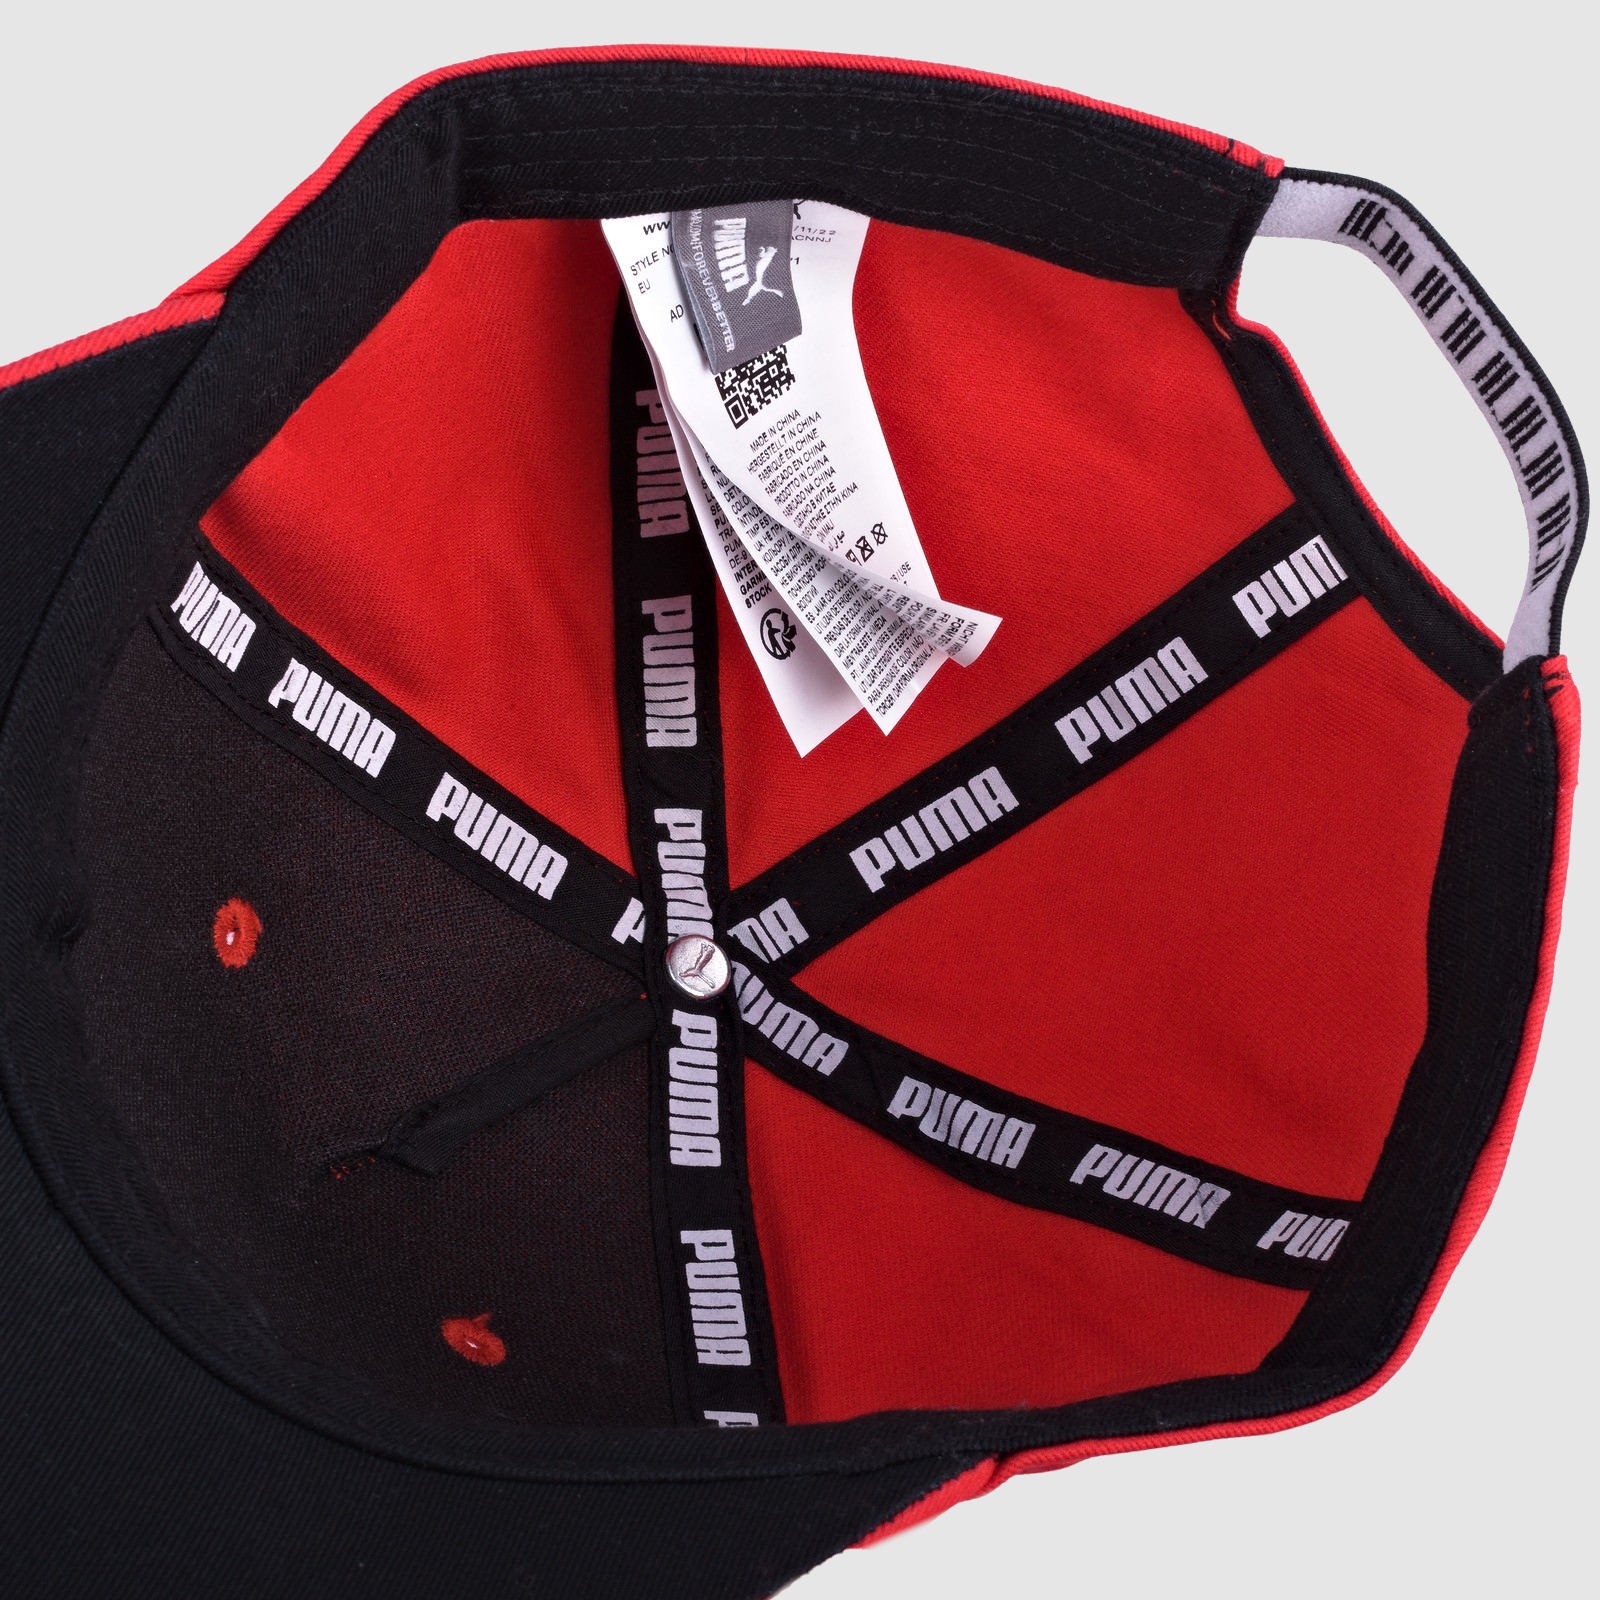 Puma Liga Erkek Kırmızı Şapka (022356-01)